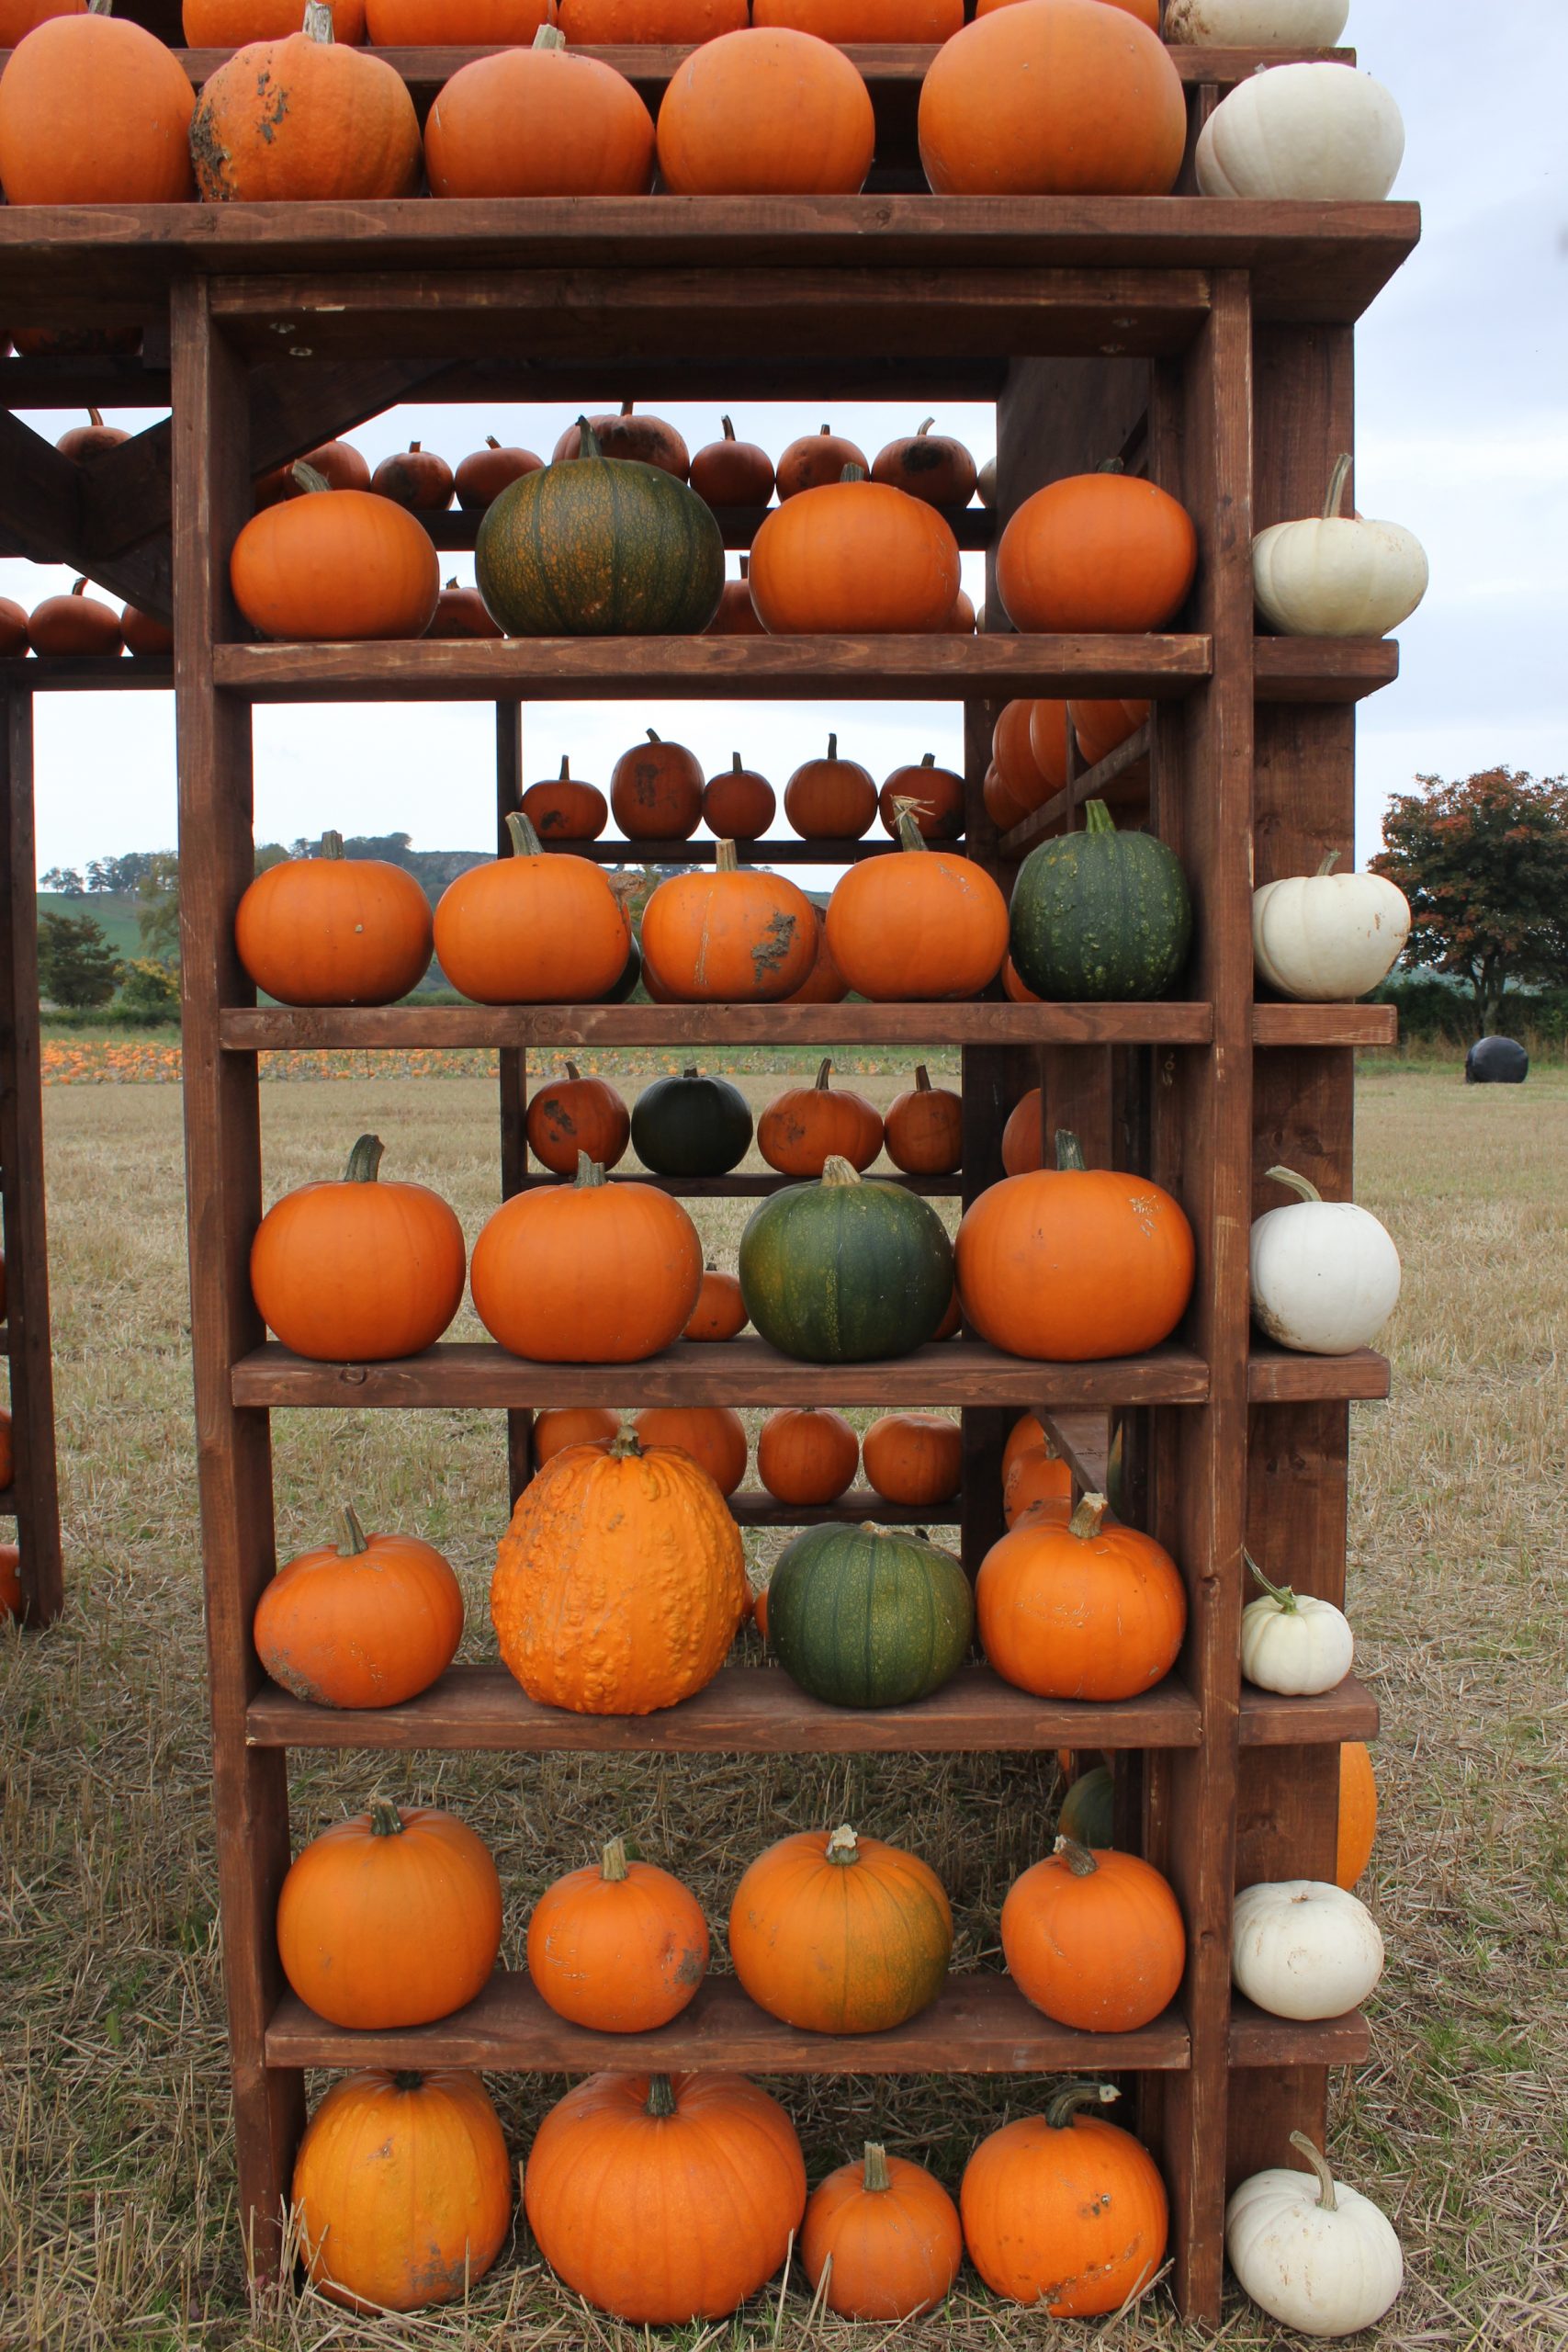 The pumpkin patch Kilduff Farm